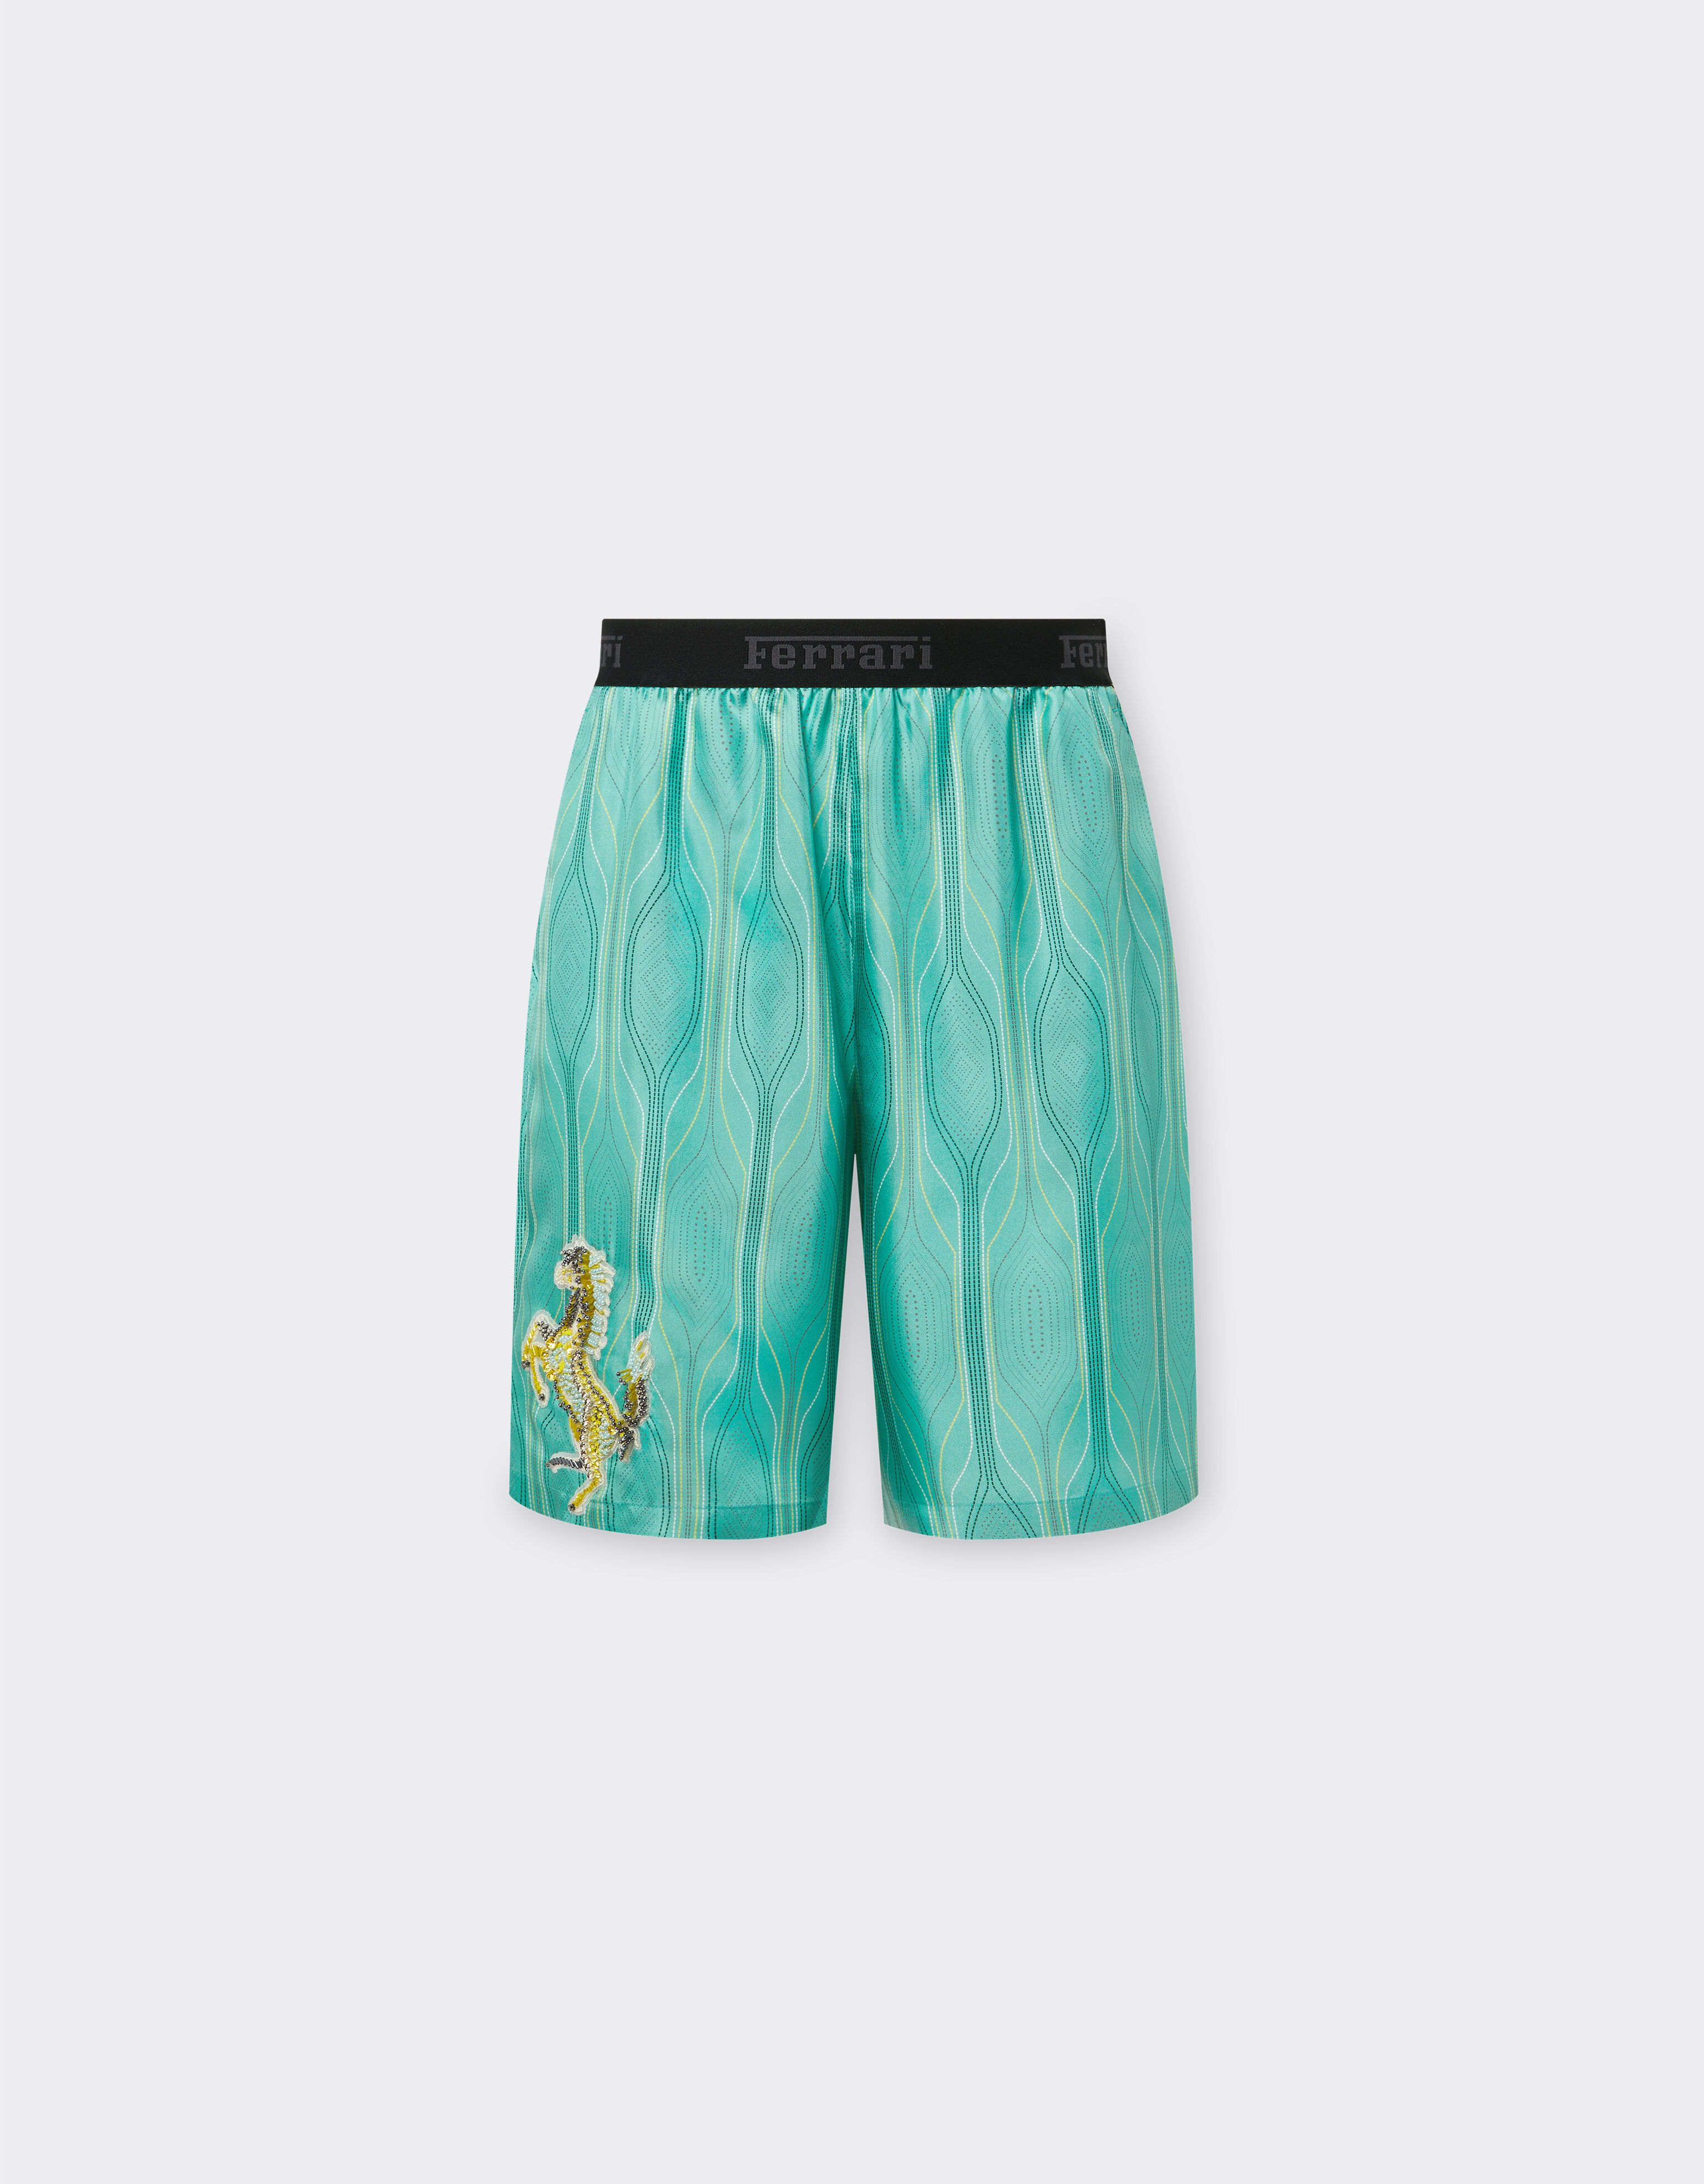 Ferrari Miami Collection silk shorts Aquamarine 21256f